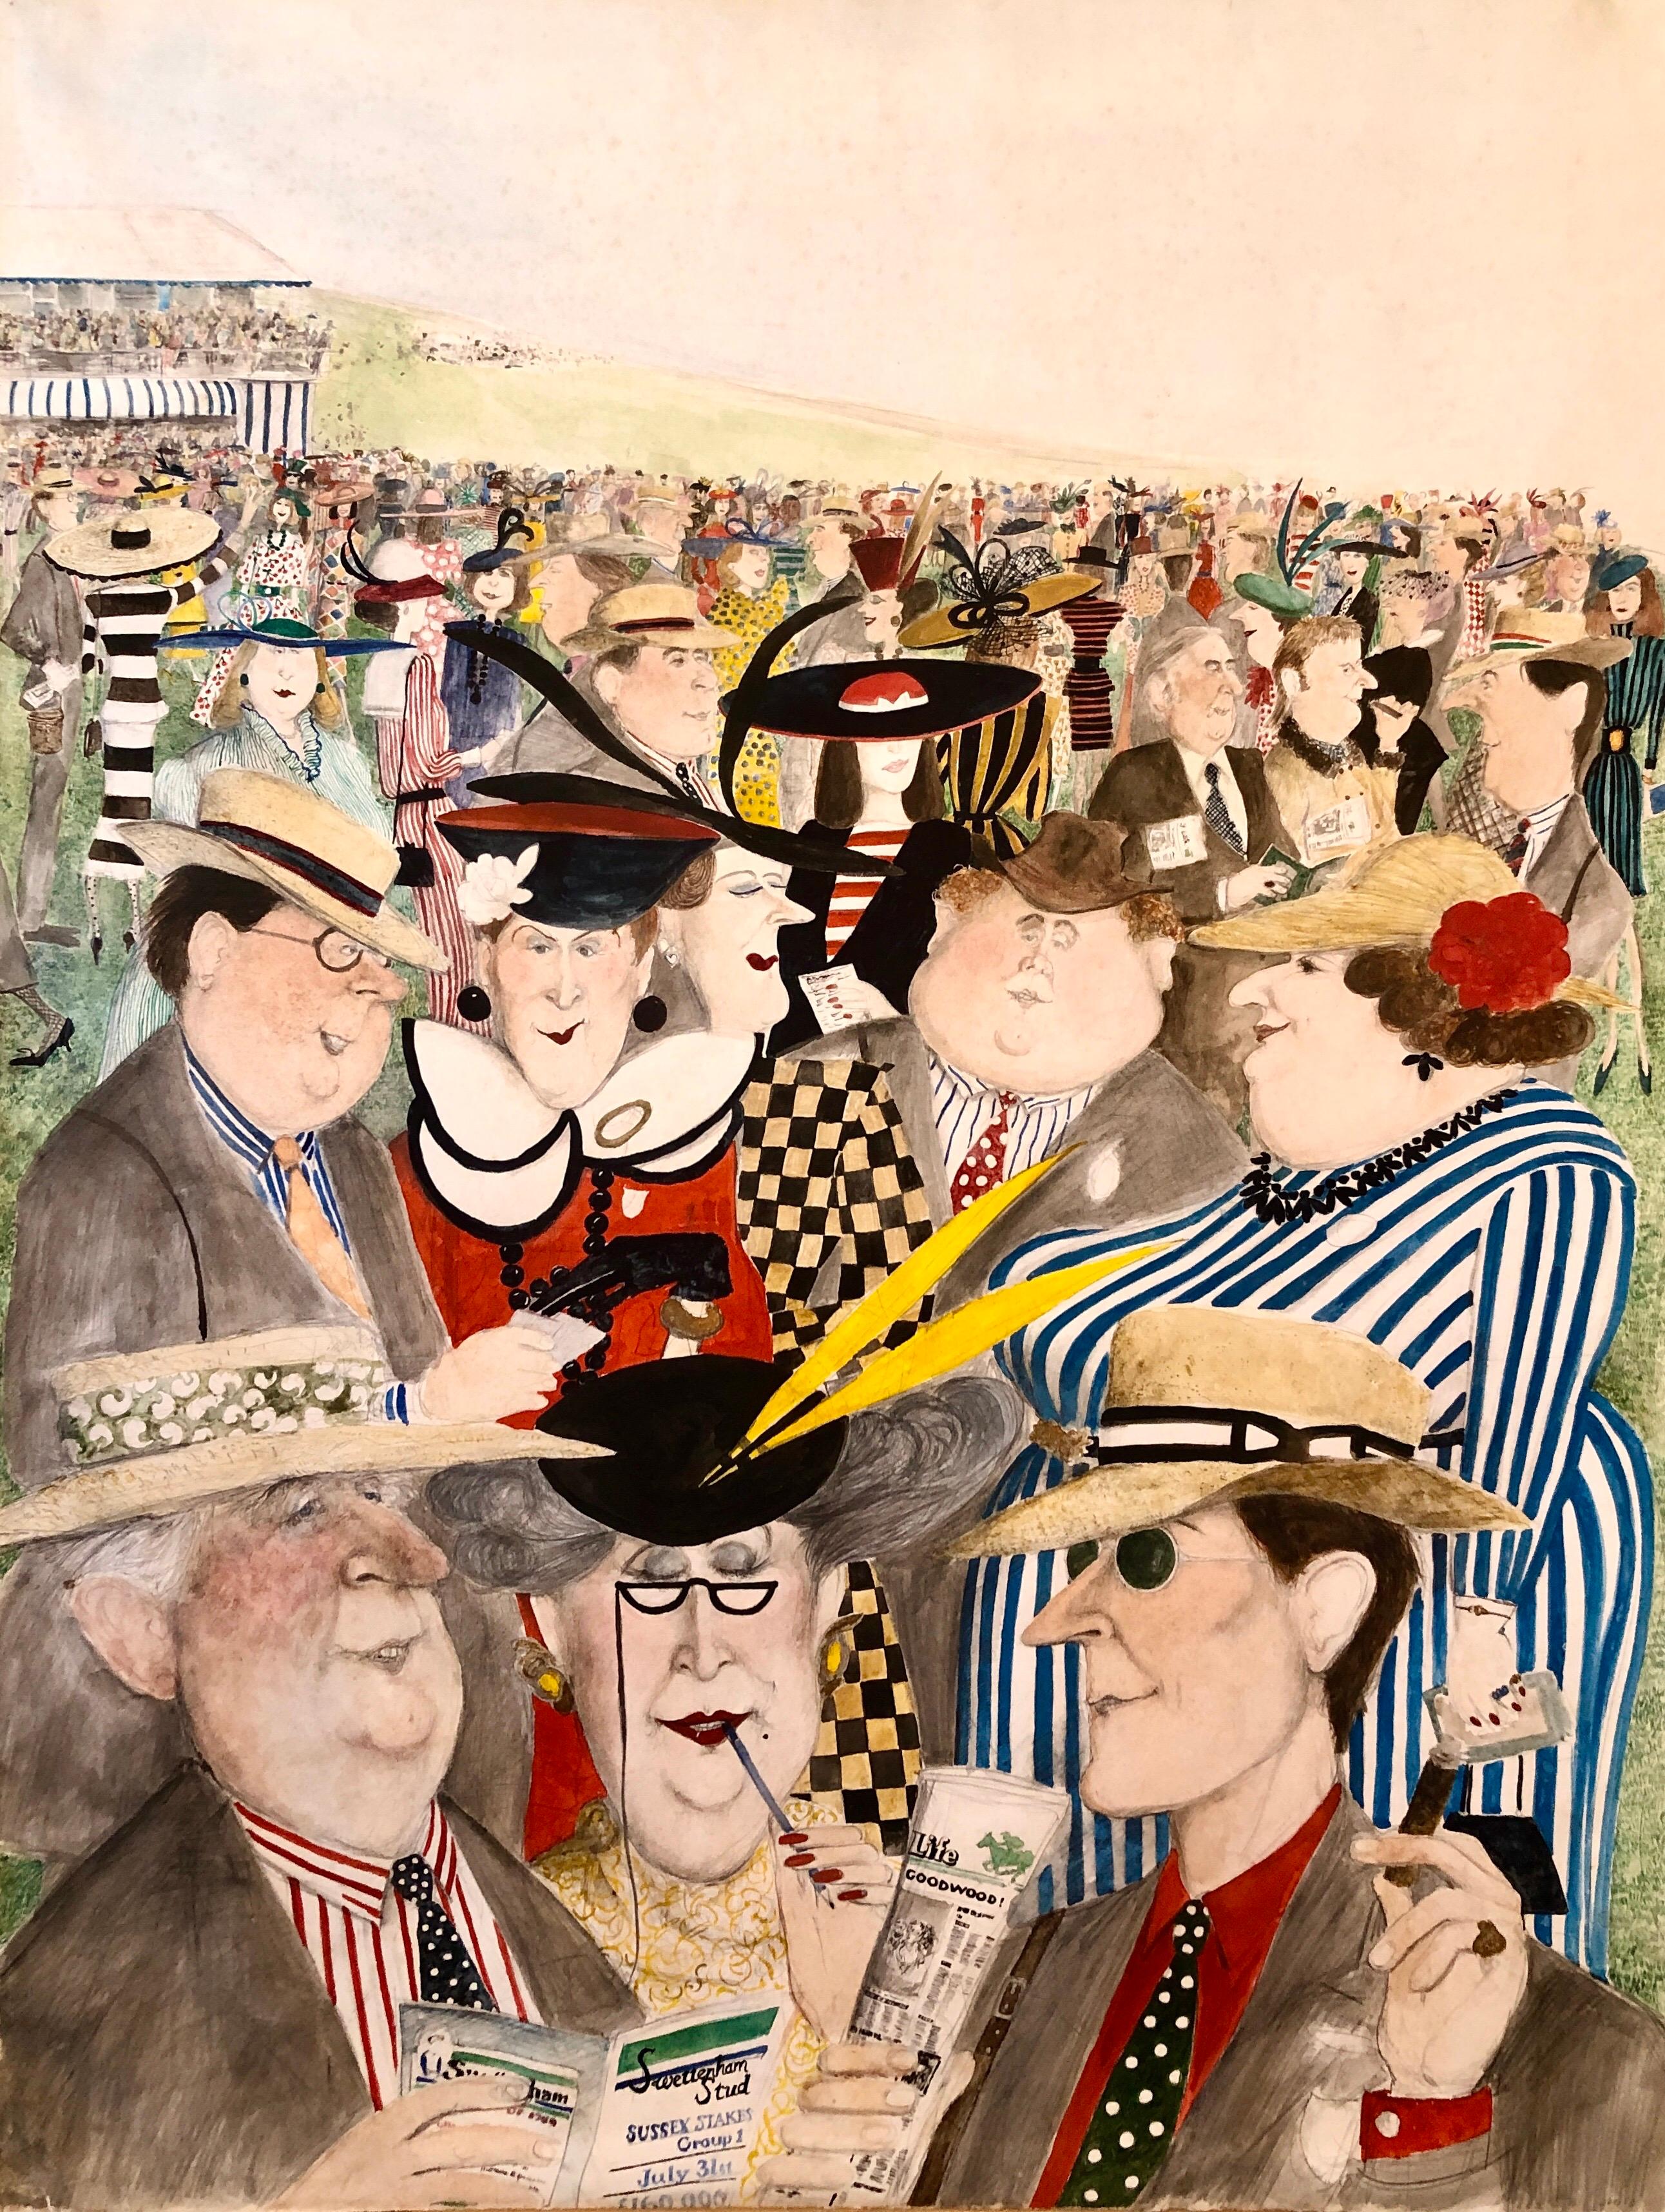 Rare Large Original British Illustration Art Watercolor Painting "Horse Races"